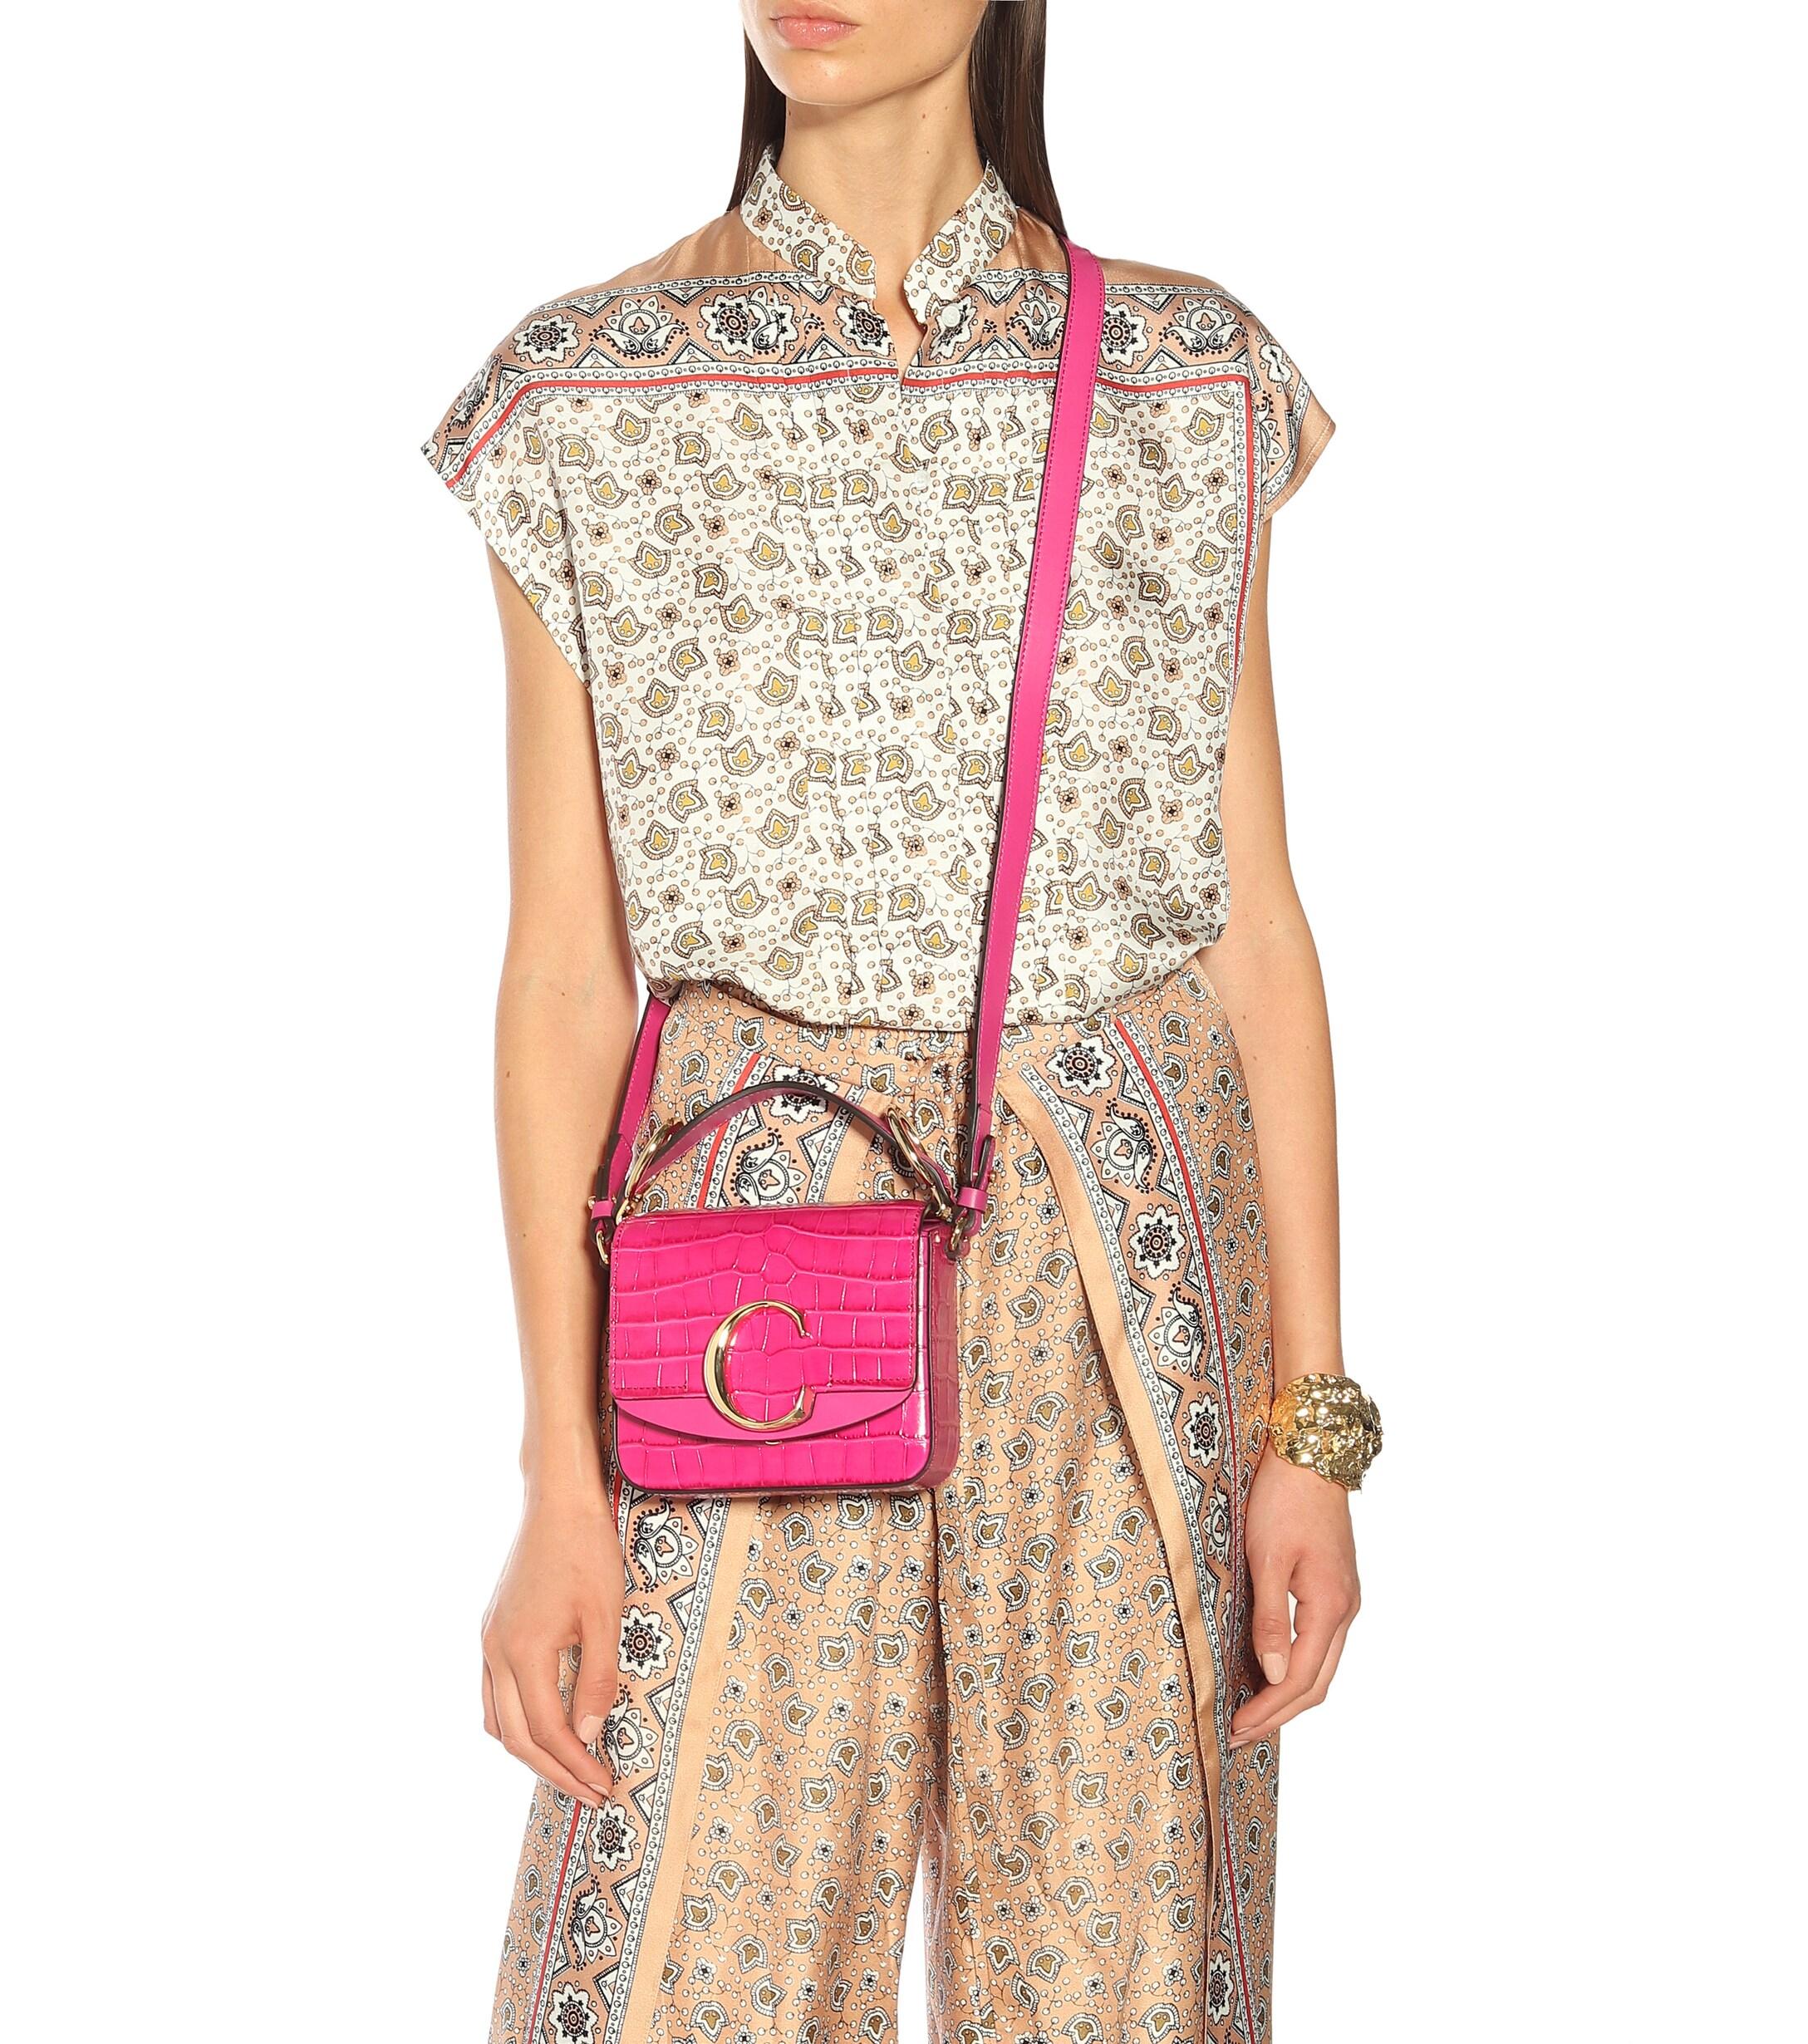 Chloé C Mini Leather Shoulder Bag in Pink - Lyst